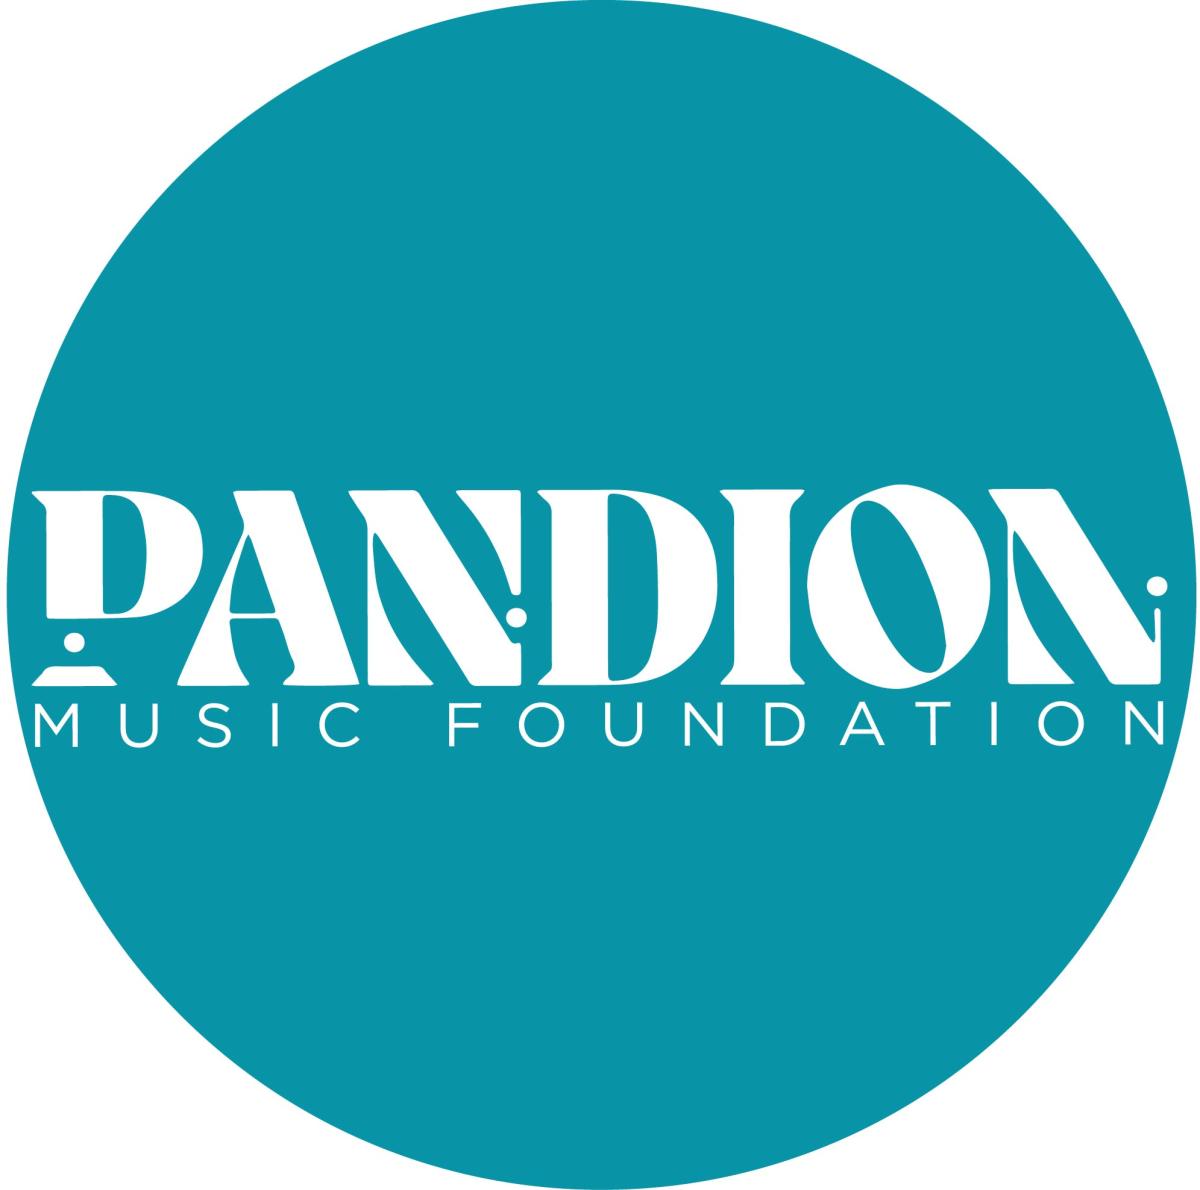 Pandion Music Foundation logo